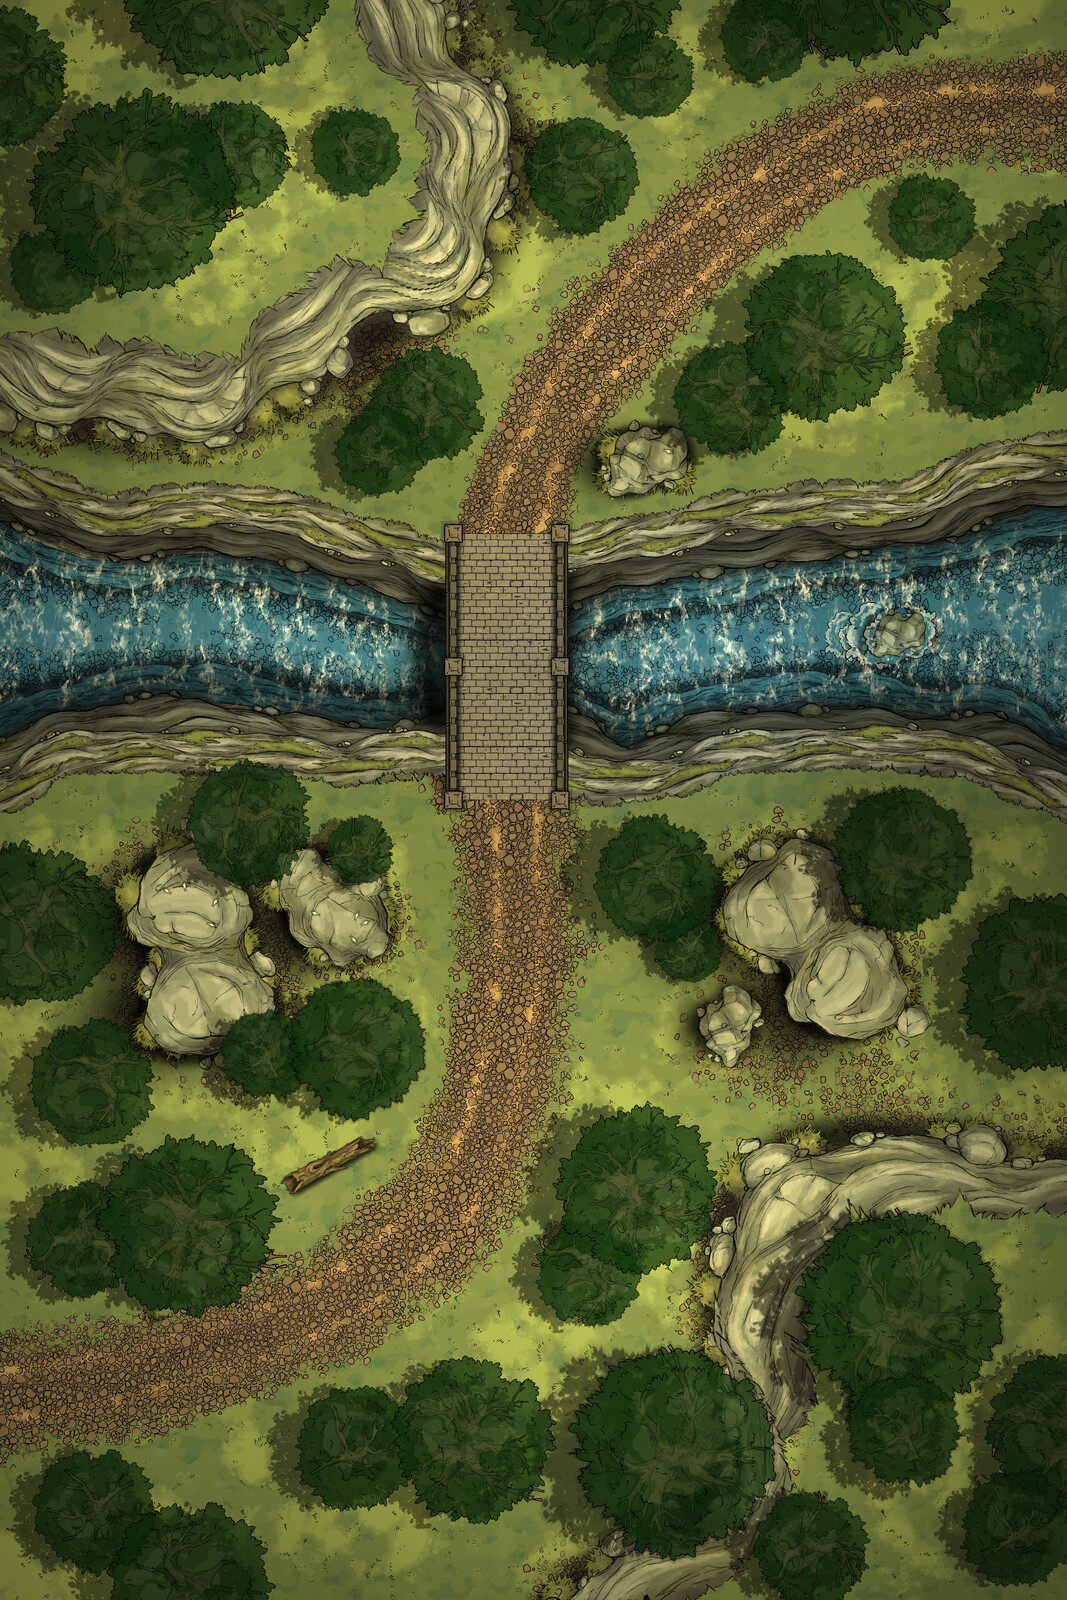 Random Encounter Maps for Forest Roads (Bridge, Boulders, Hills)